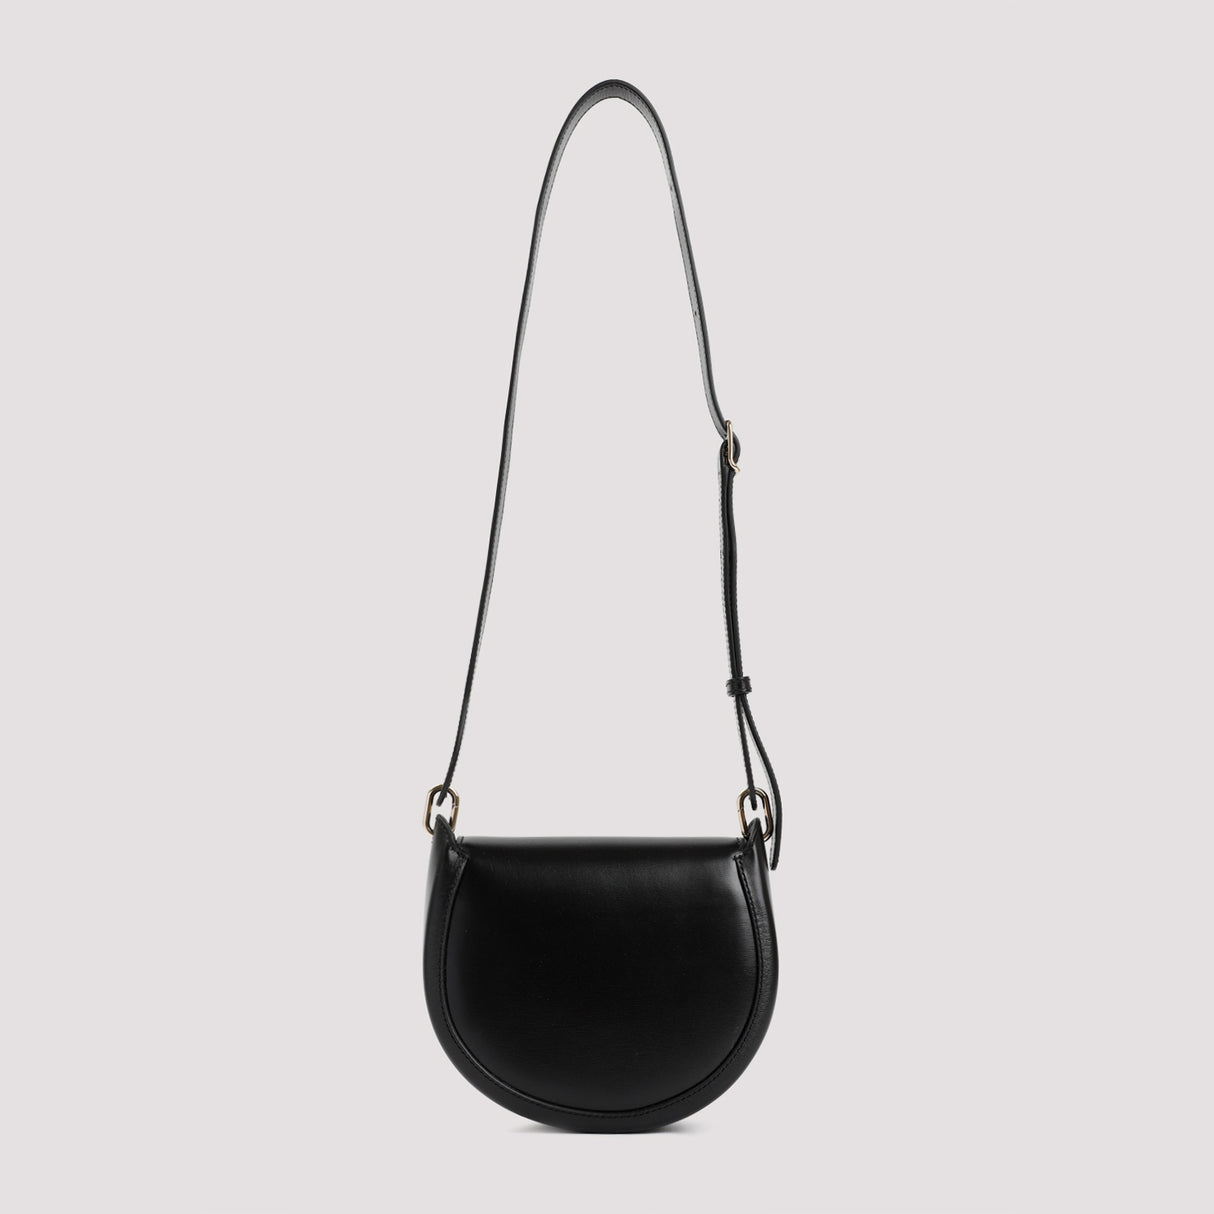 CHLOÉ Small Black Arlène Leather Shoulder Bag with Silver-Tone Hardware